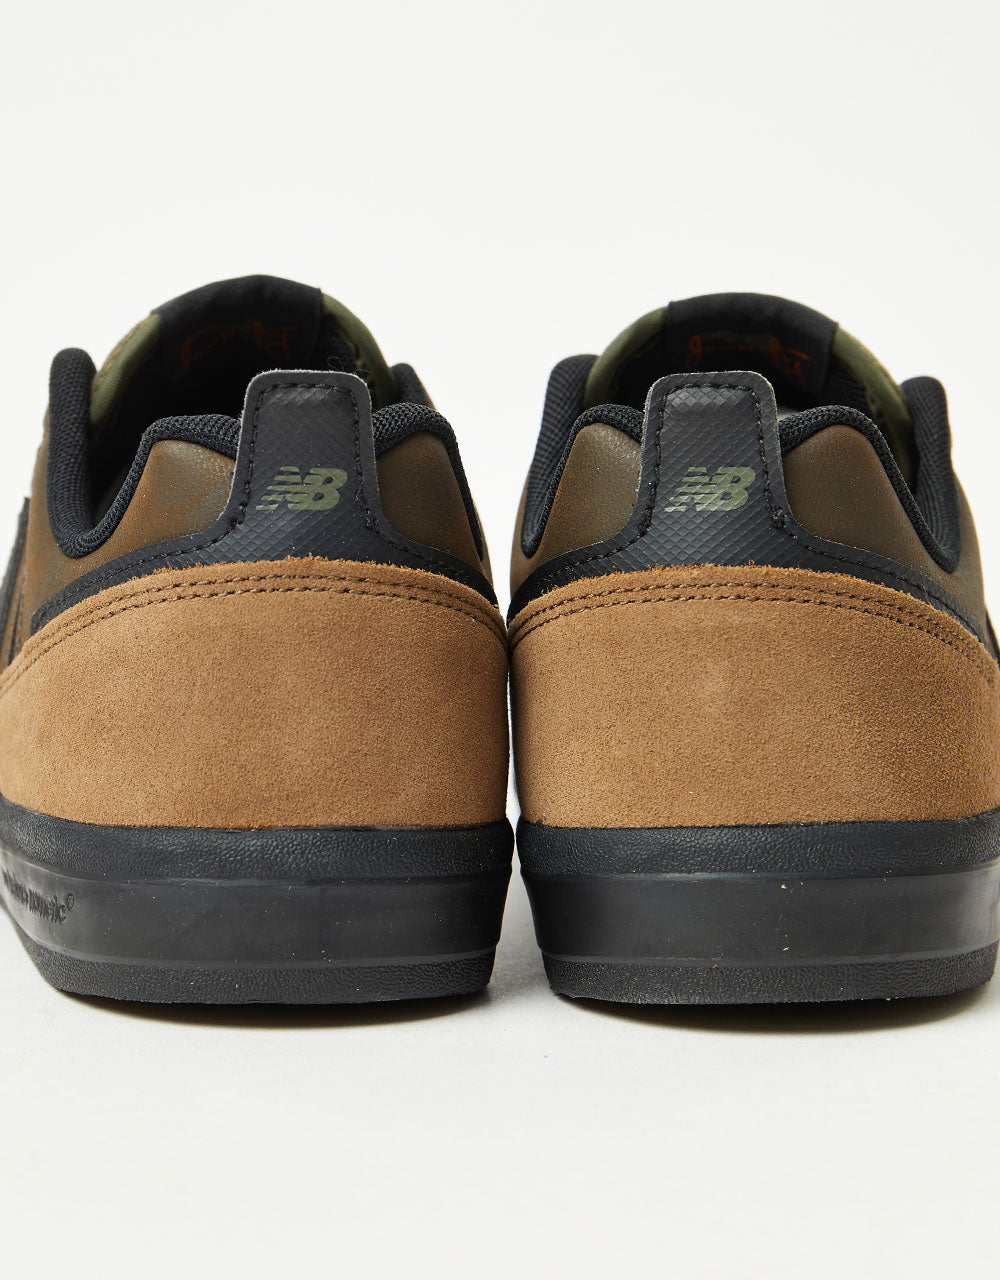 New Balance Numeric 306 Skate Shoes - Brown/Black